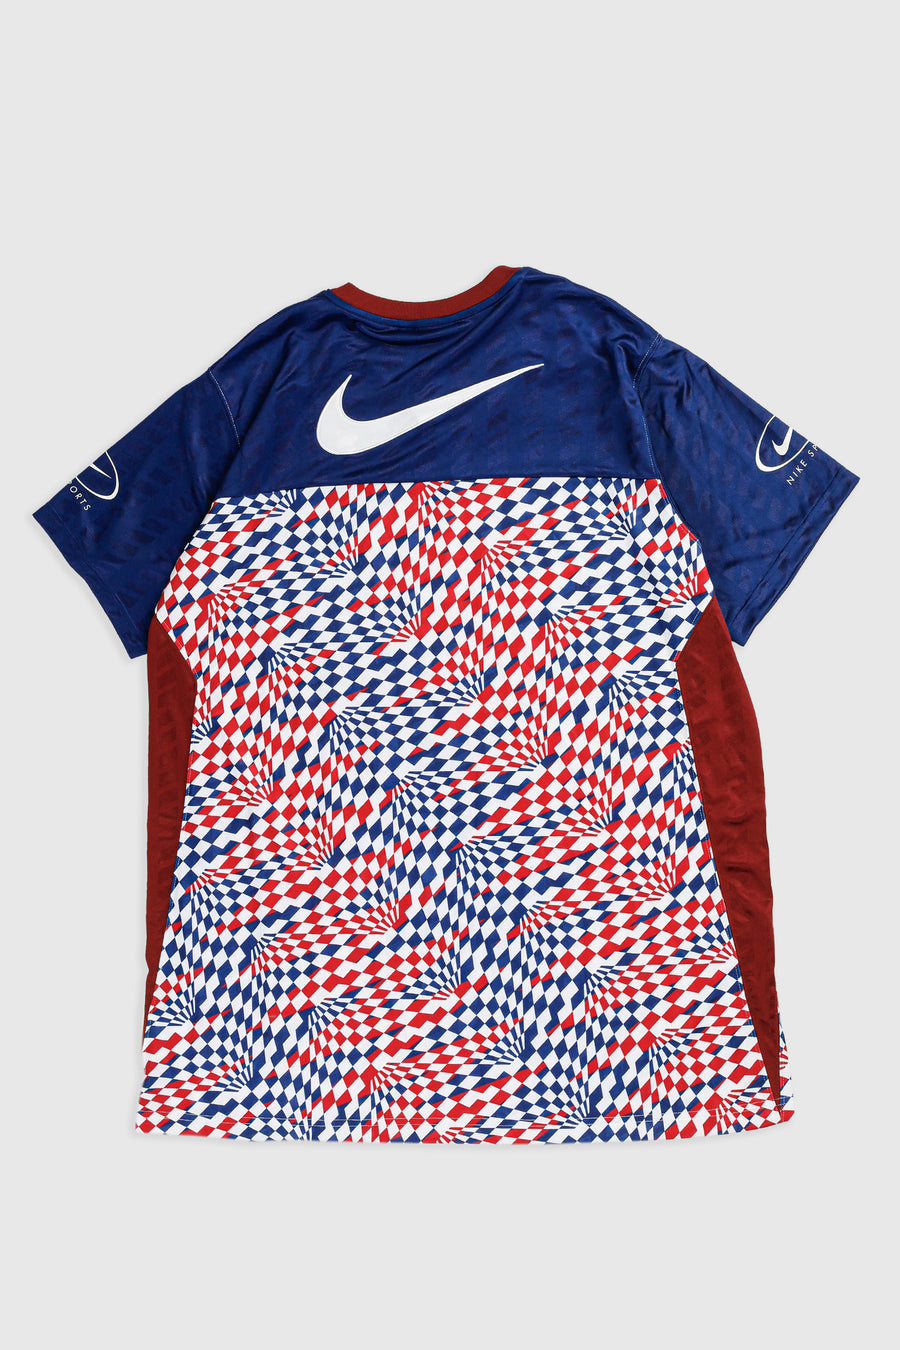 Vintage Nike Soccer Jersey - XL